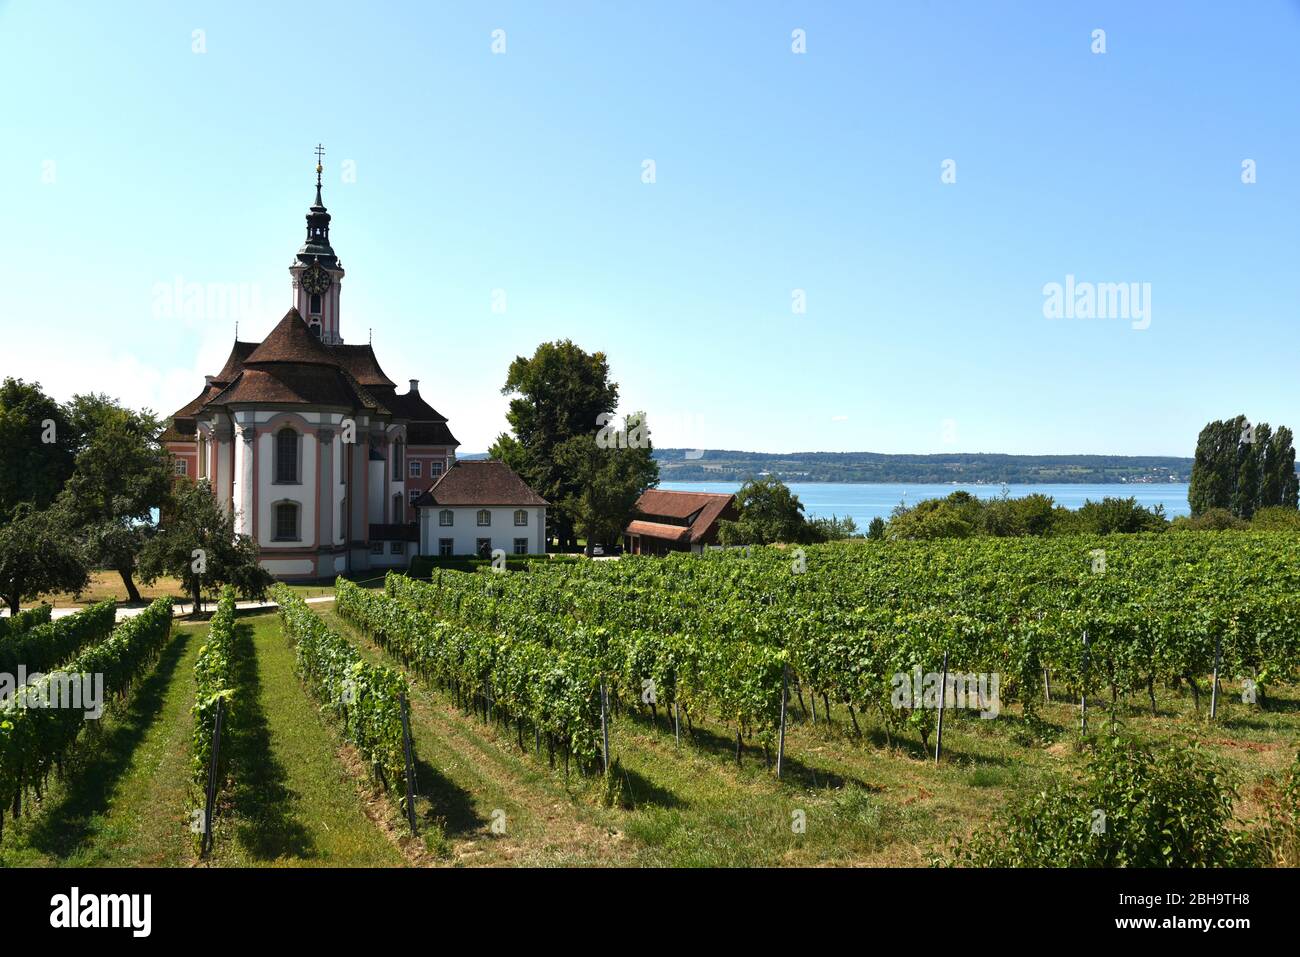 Europe, Germany, Baden-Württemberg, Lake Constance, Birnau, pilgrimage church Stock Photo